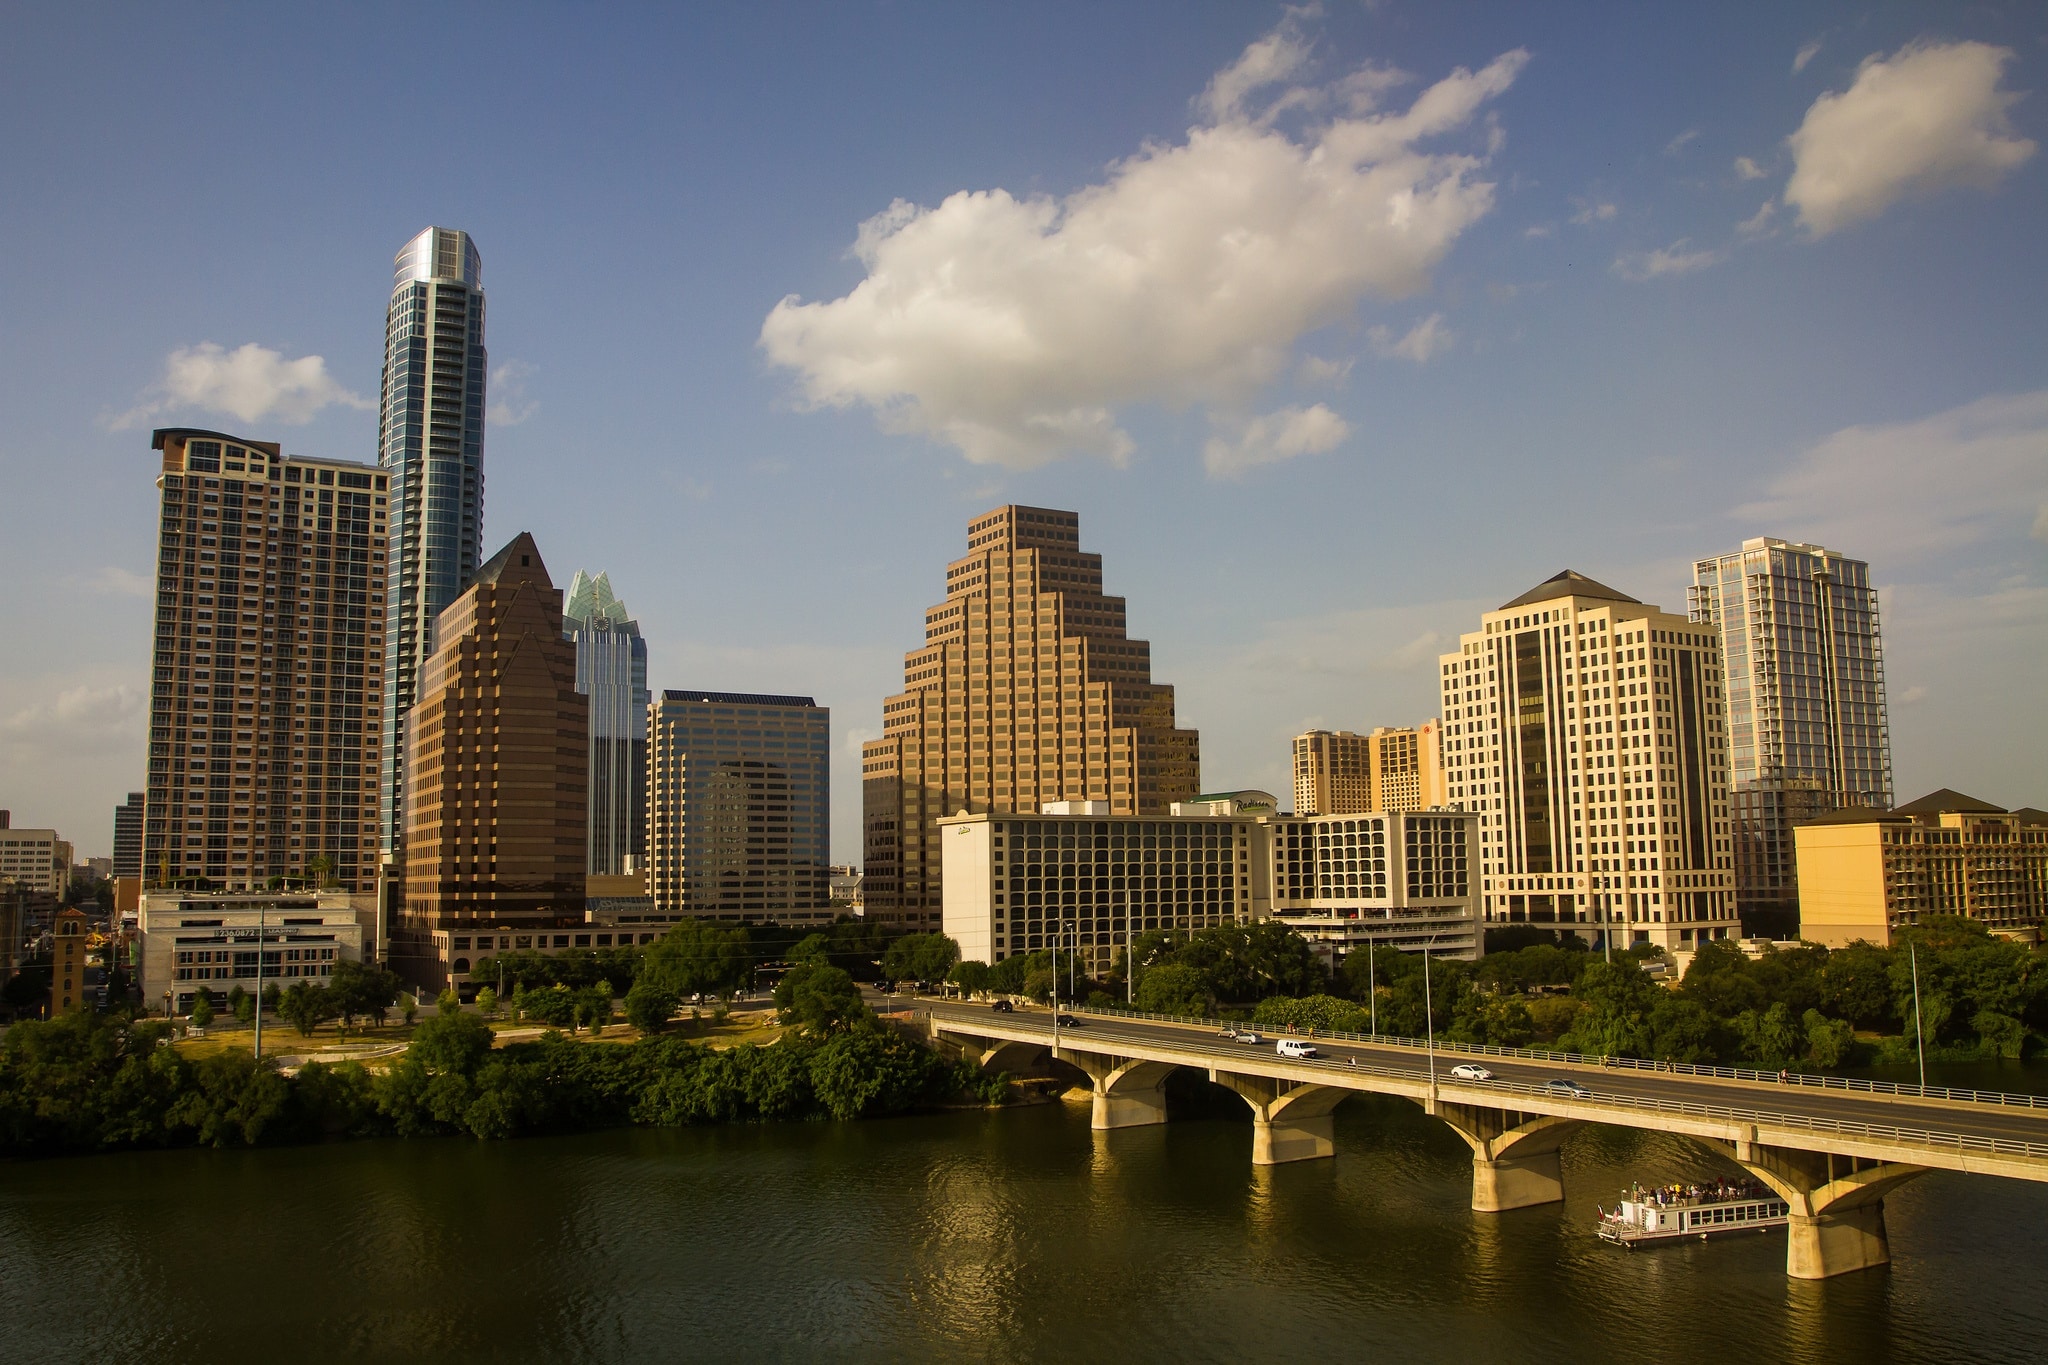 Austin city skyline